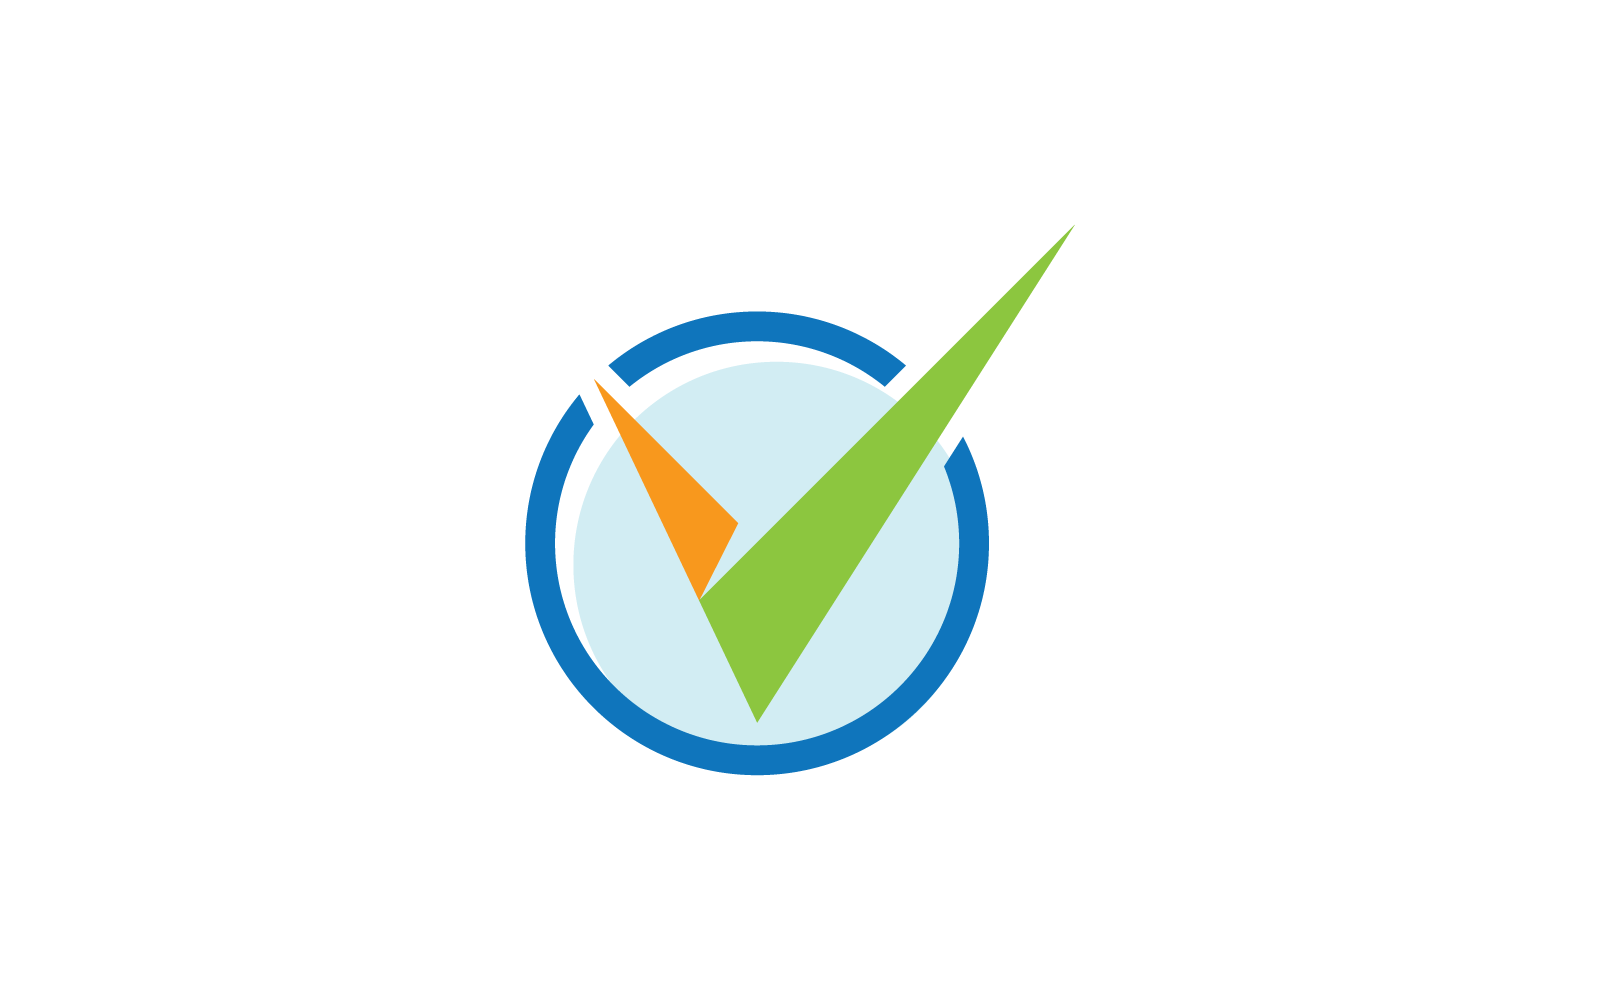 V Letter design illustration logo vector